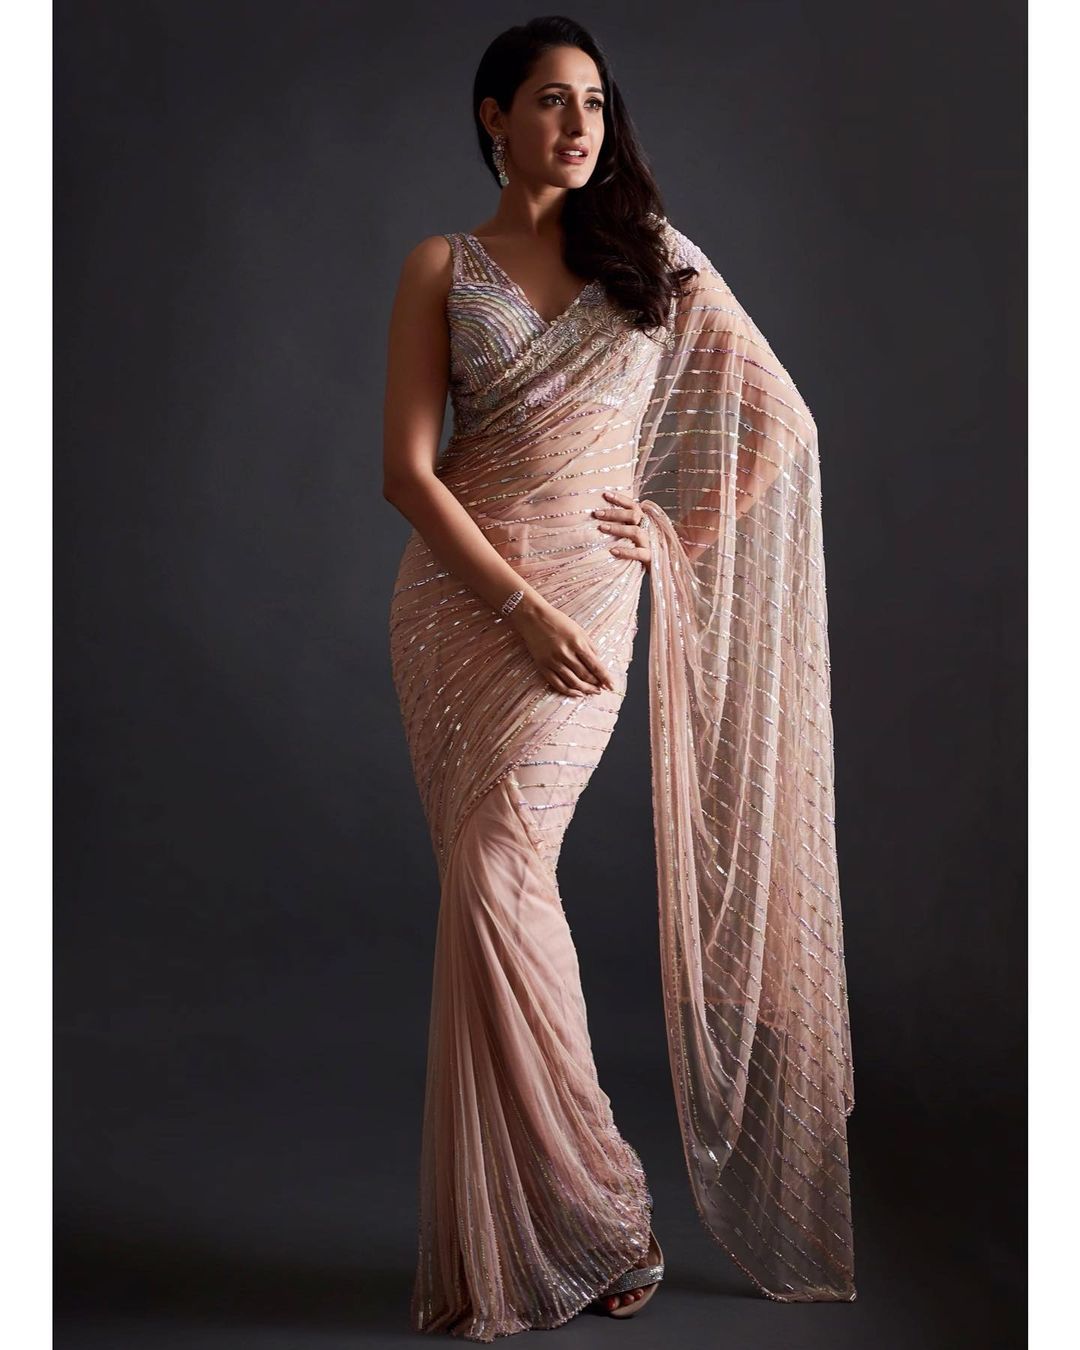 ragya Jaiswal looks flawless in the semi-sheer saree